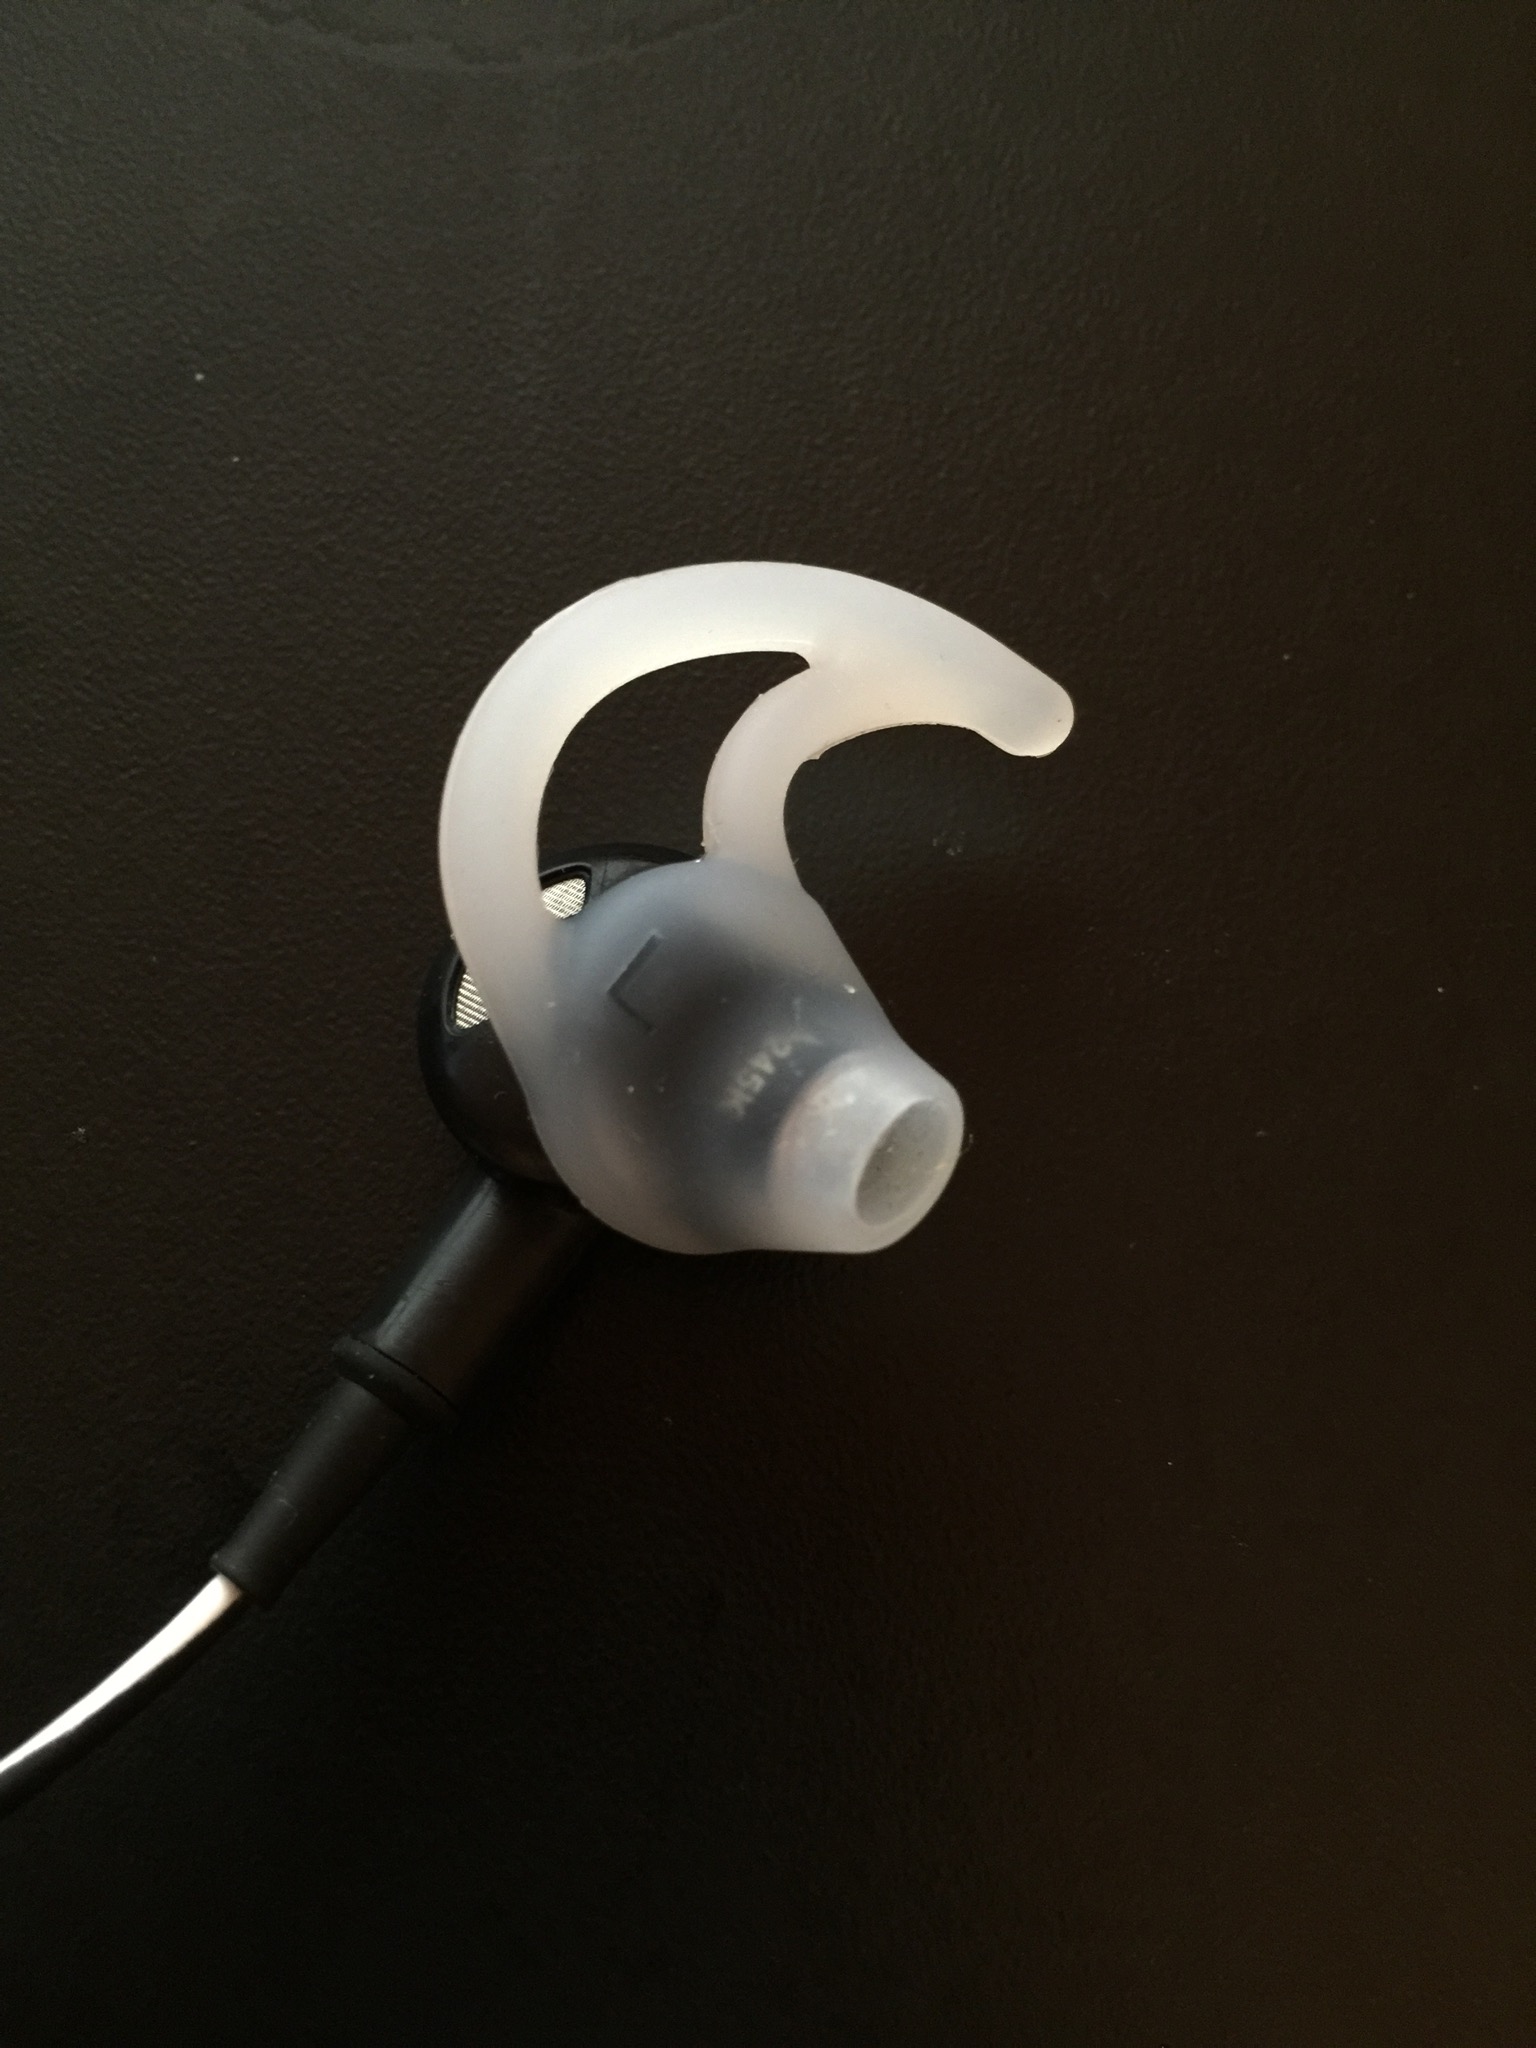 Bose unique earbud design